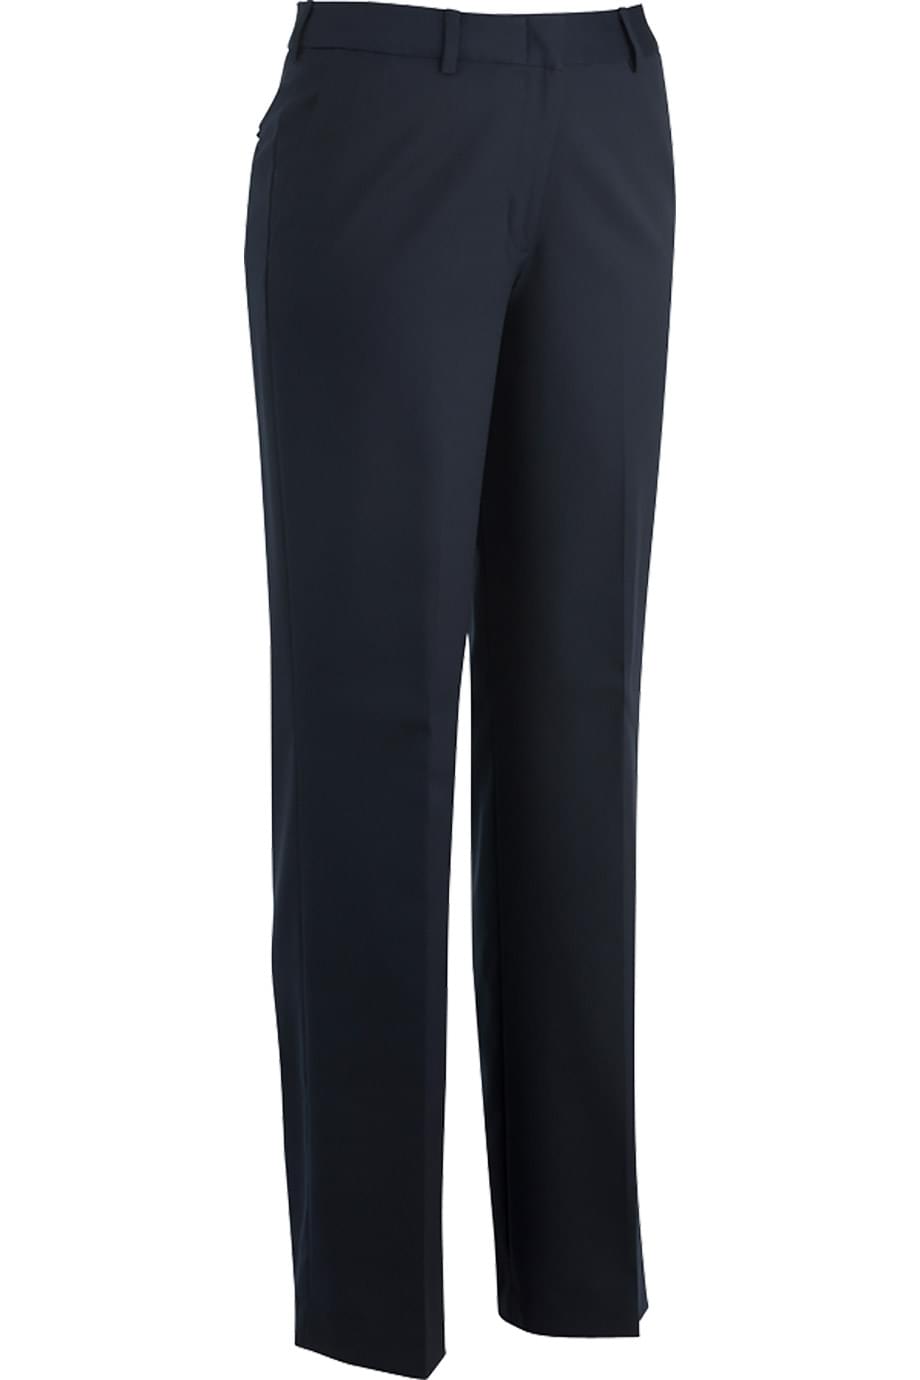 Buy Ruhfab Regular Fit Cotton Trouser Pants for Women/Ladies Cotton Pants  (Sky-Blue/Medium) at Amazon.in